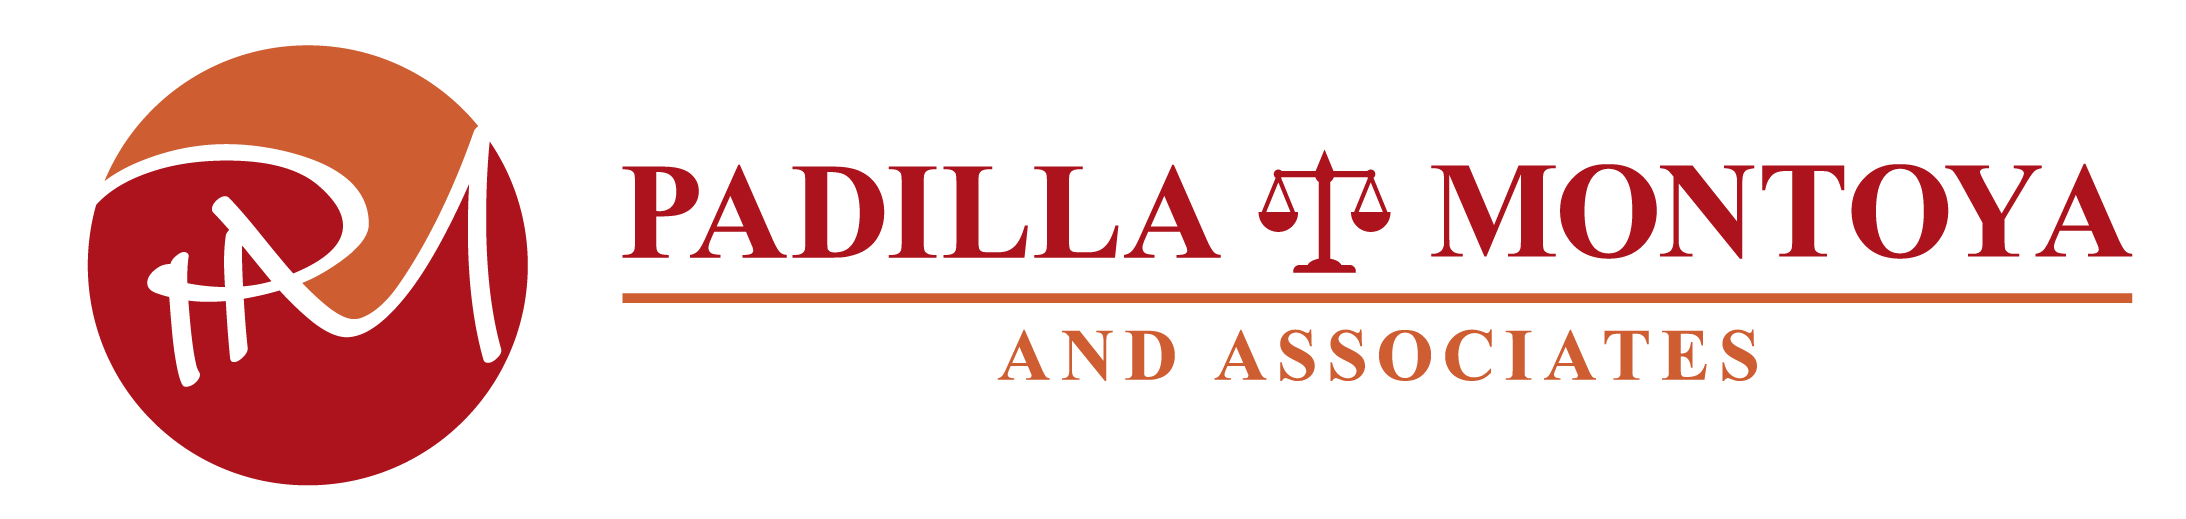 Padilla, Montoya and Associates